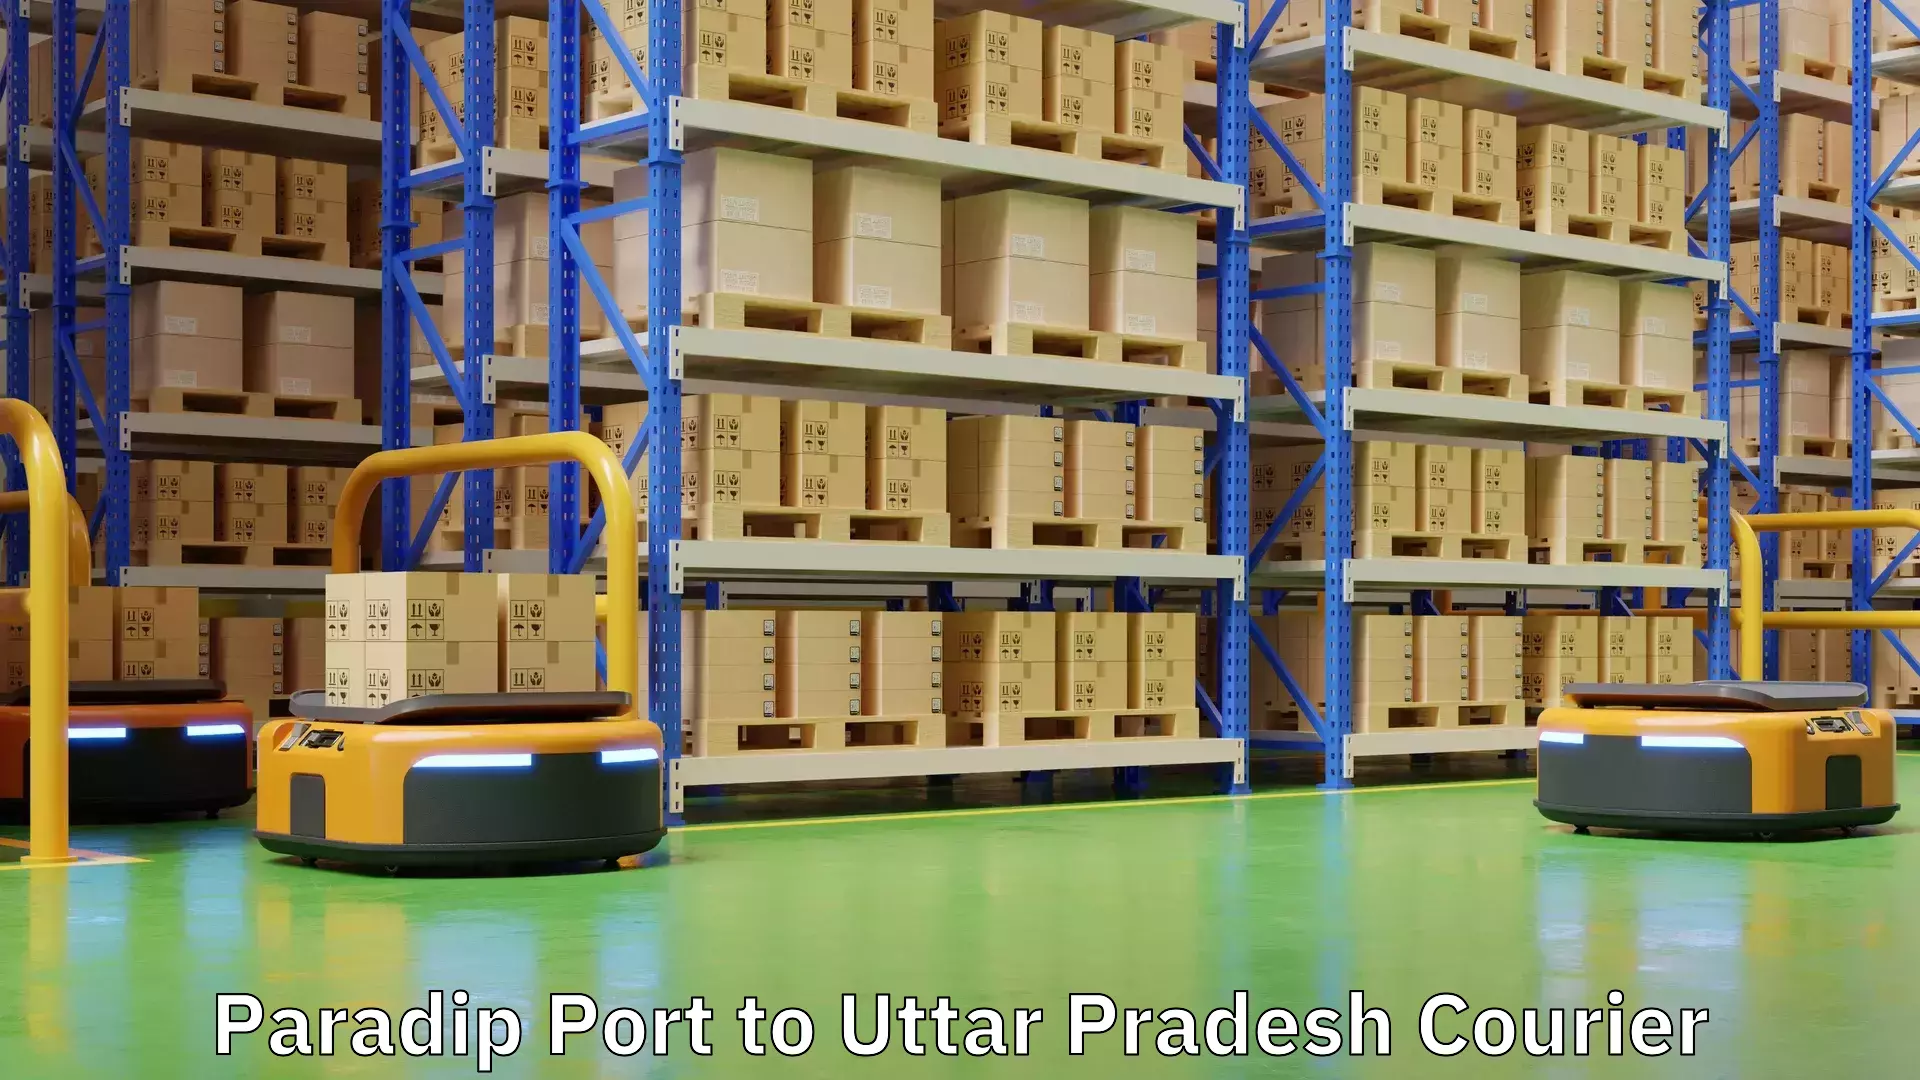 Express logistics service Paradip Port to Uttar Pradesh